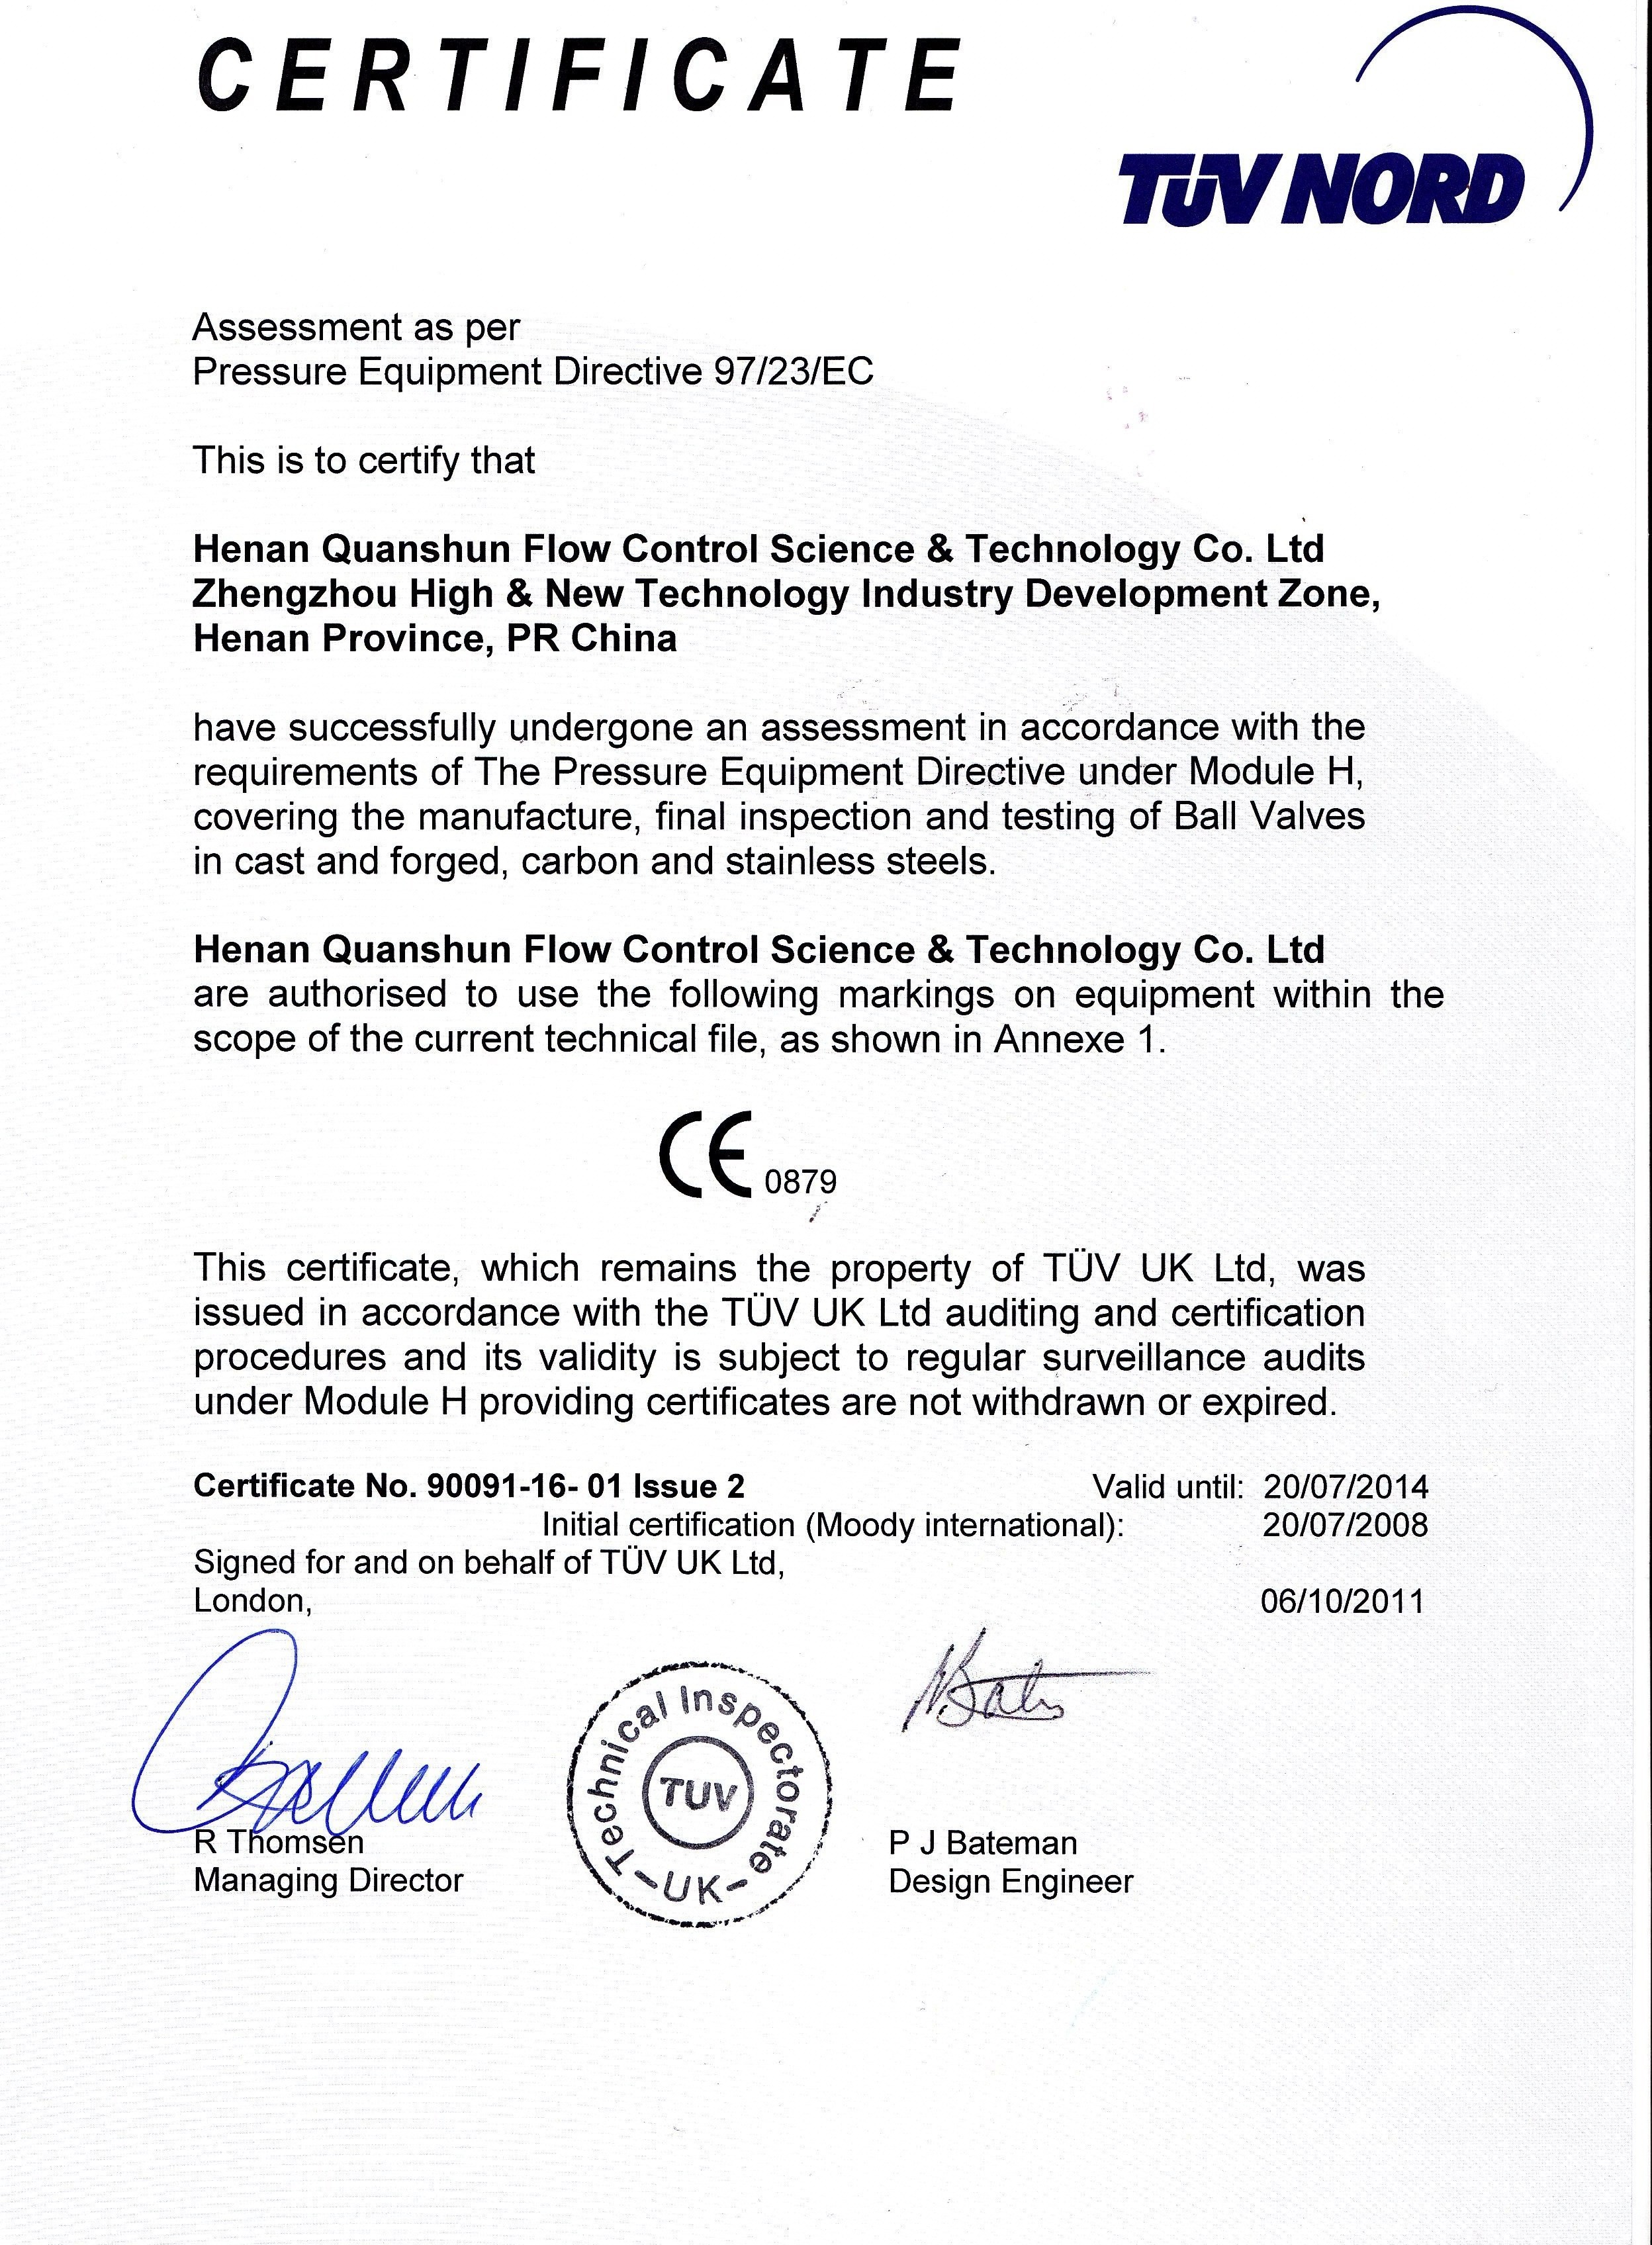 Henan Quanshun Flow Control Science&Technology CO.,LTD. Certifications